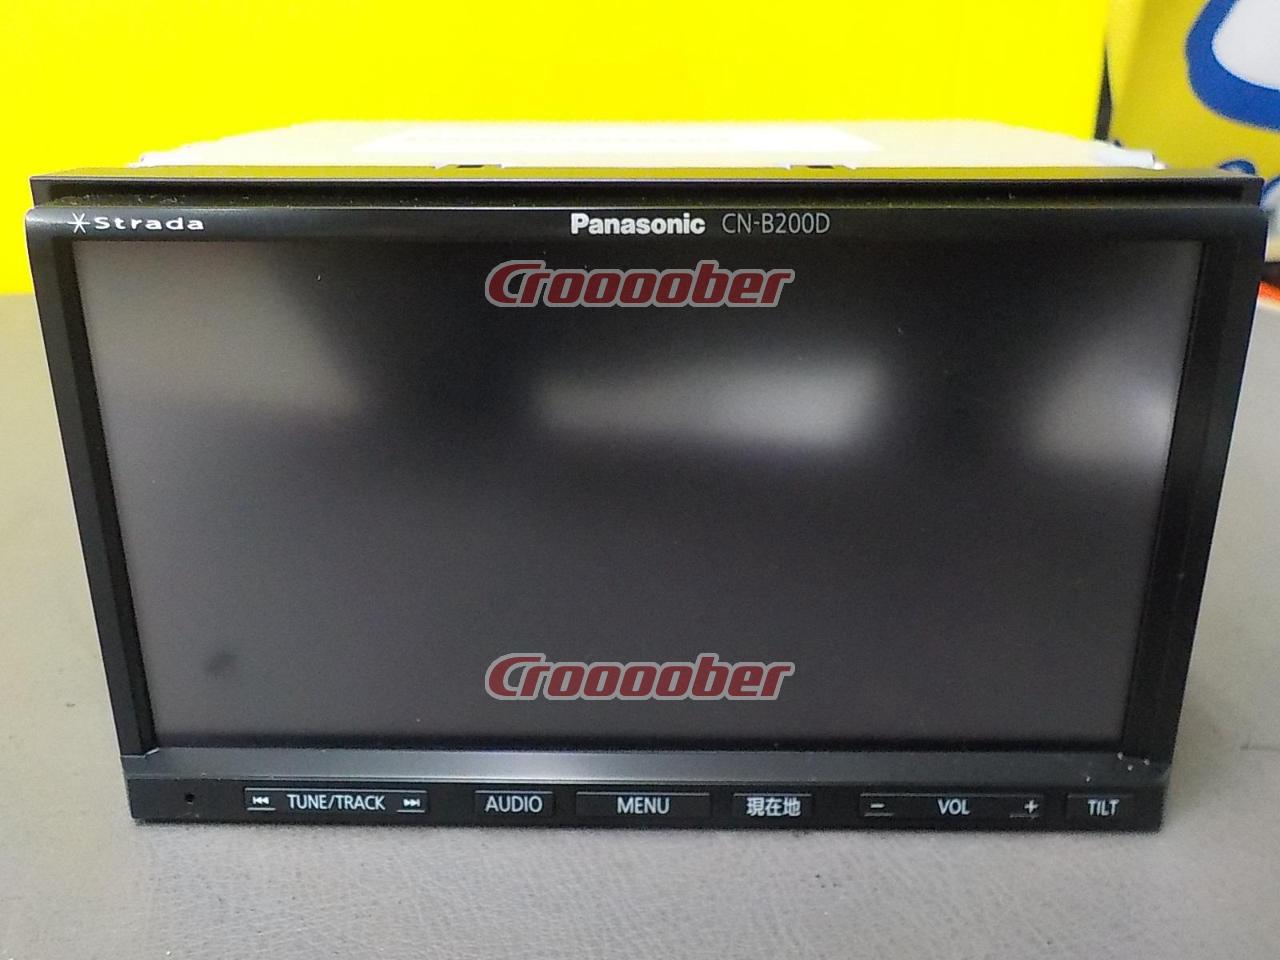 Panasonic CN-B200D | Memory Navigation(analog) | Croooober